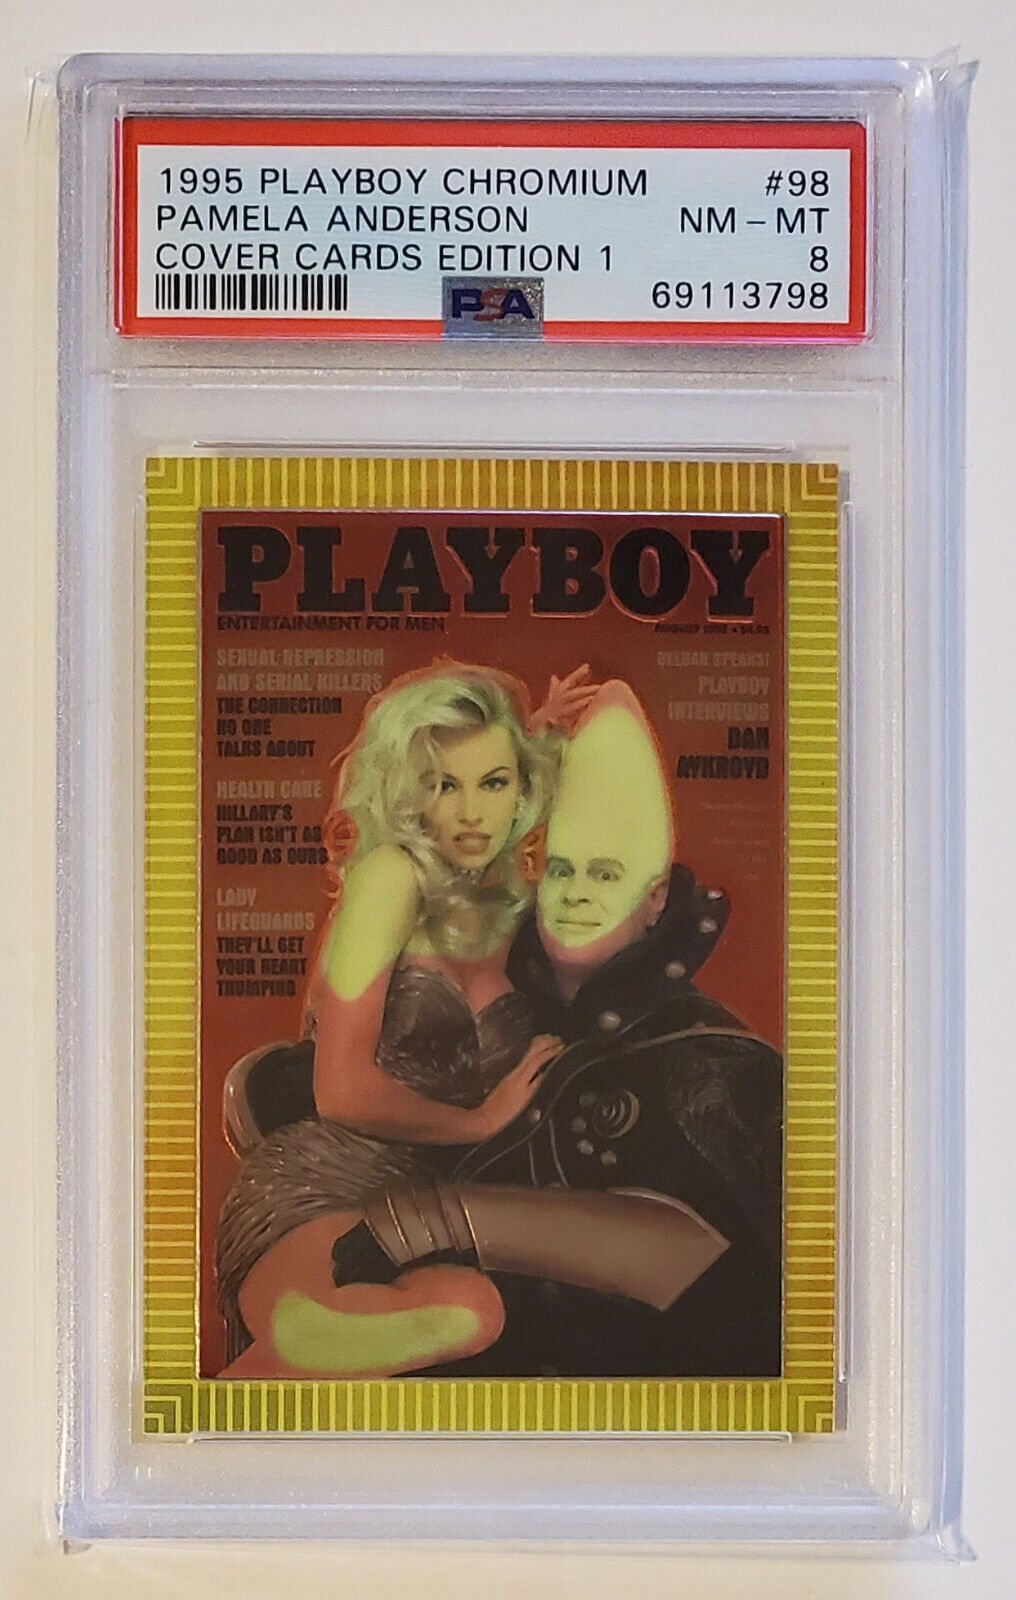 Pamela Anderson / Dan Aykroyd - 1995 Playboy Chromium Cover Card #98 PSA 8 NM-MT